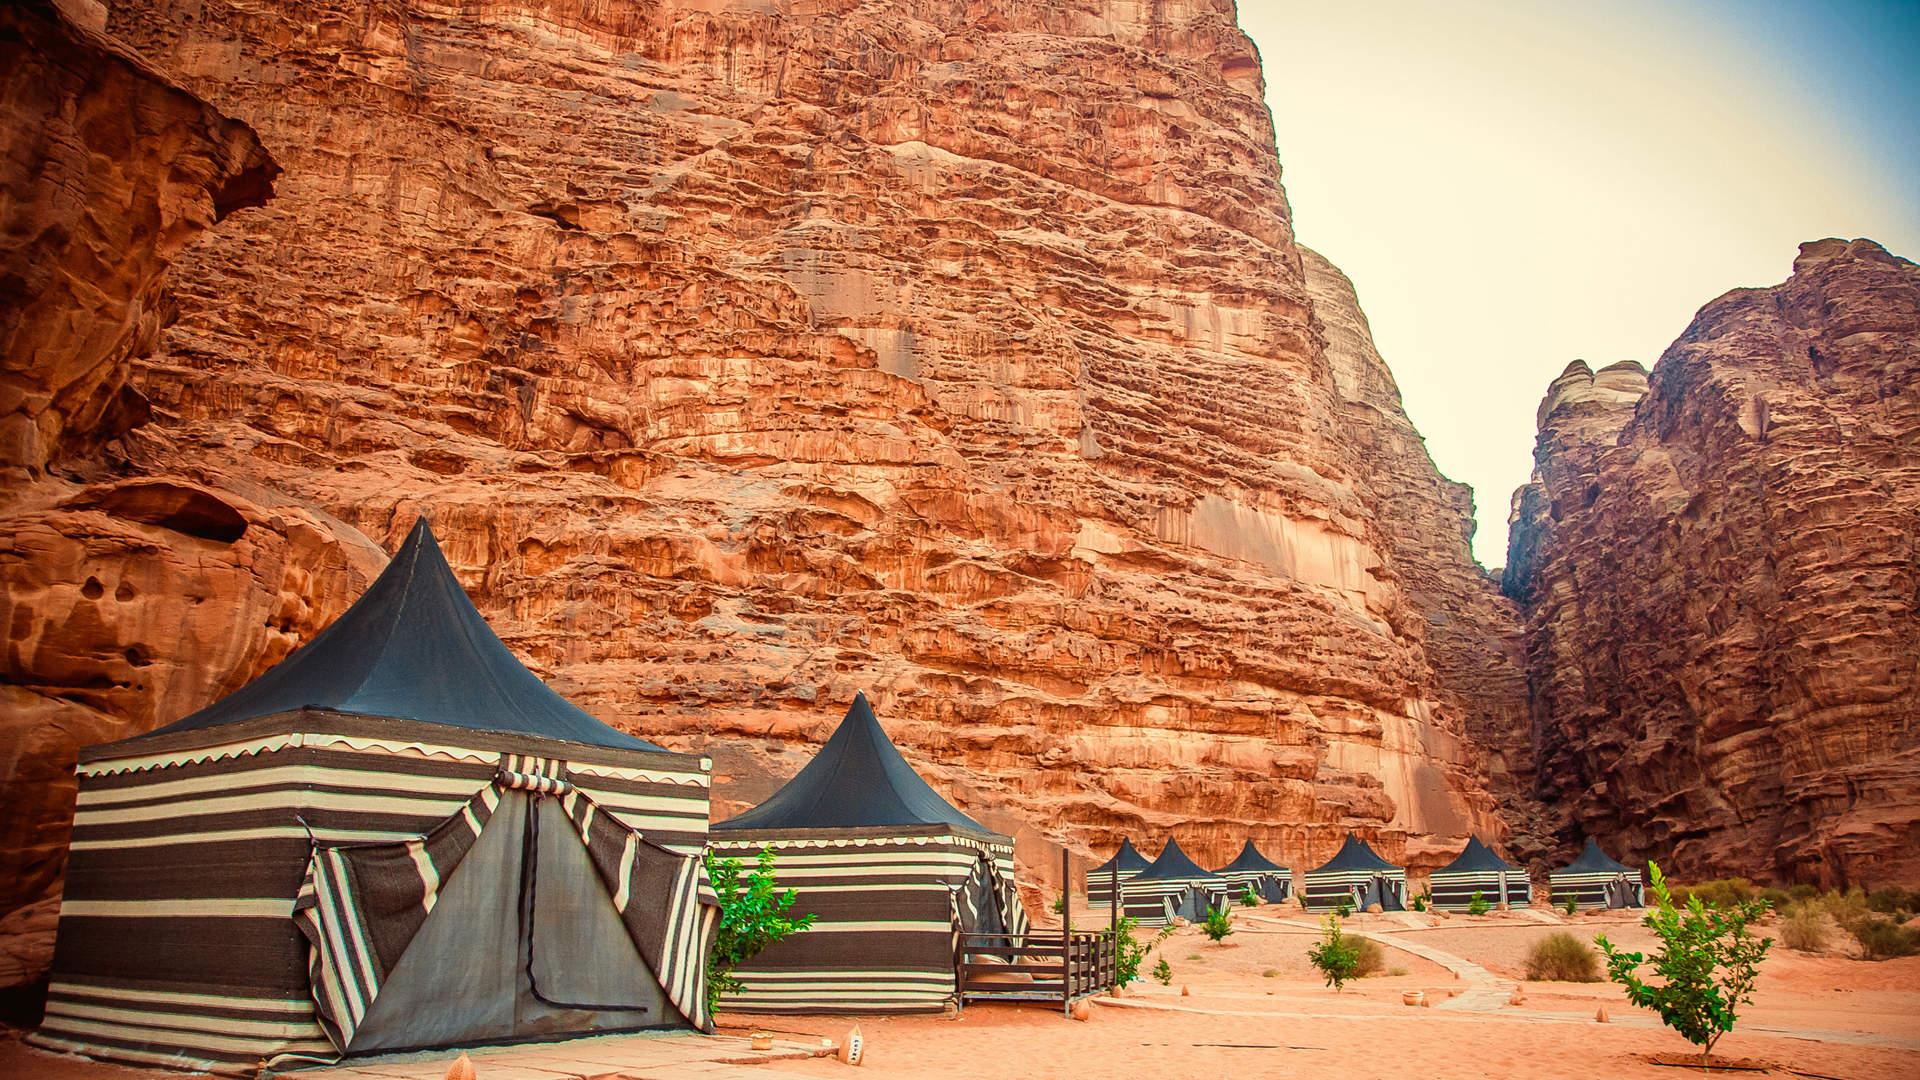 Camping Along The Rocks In Petra, Wadi Rum